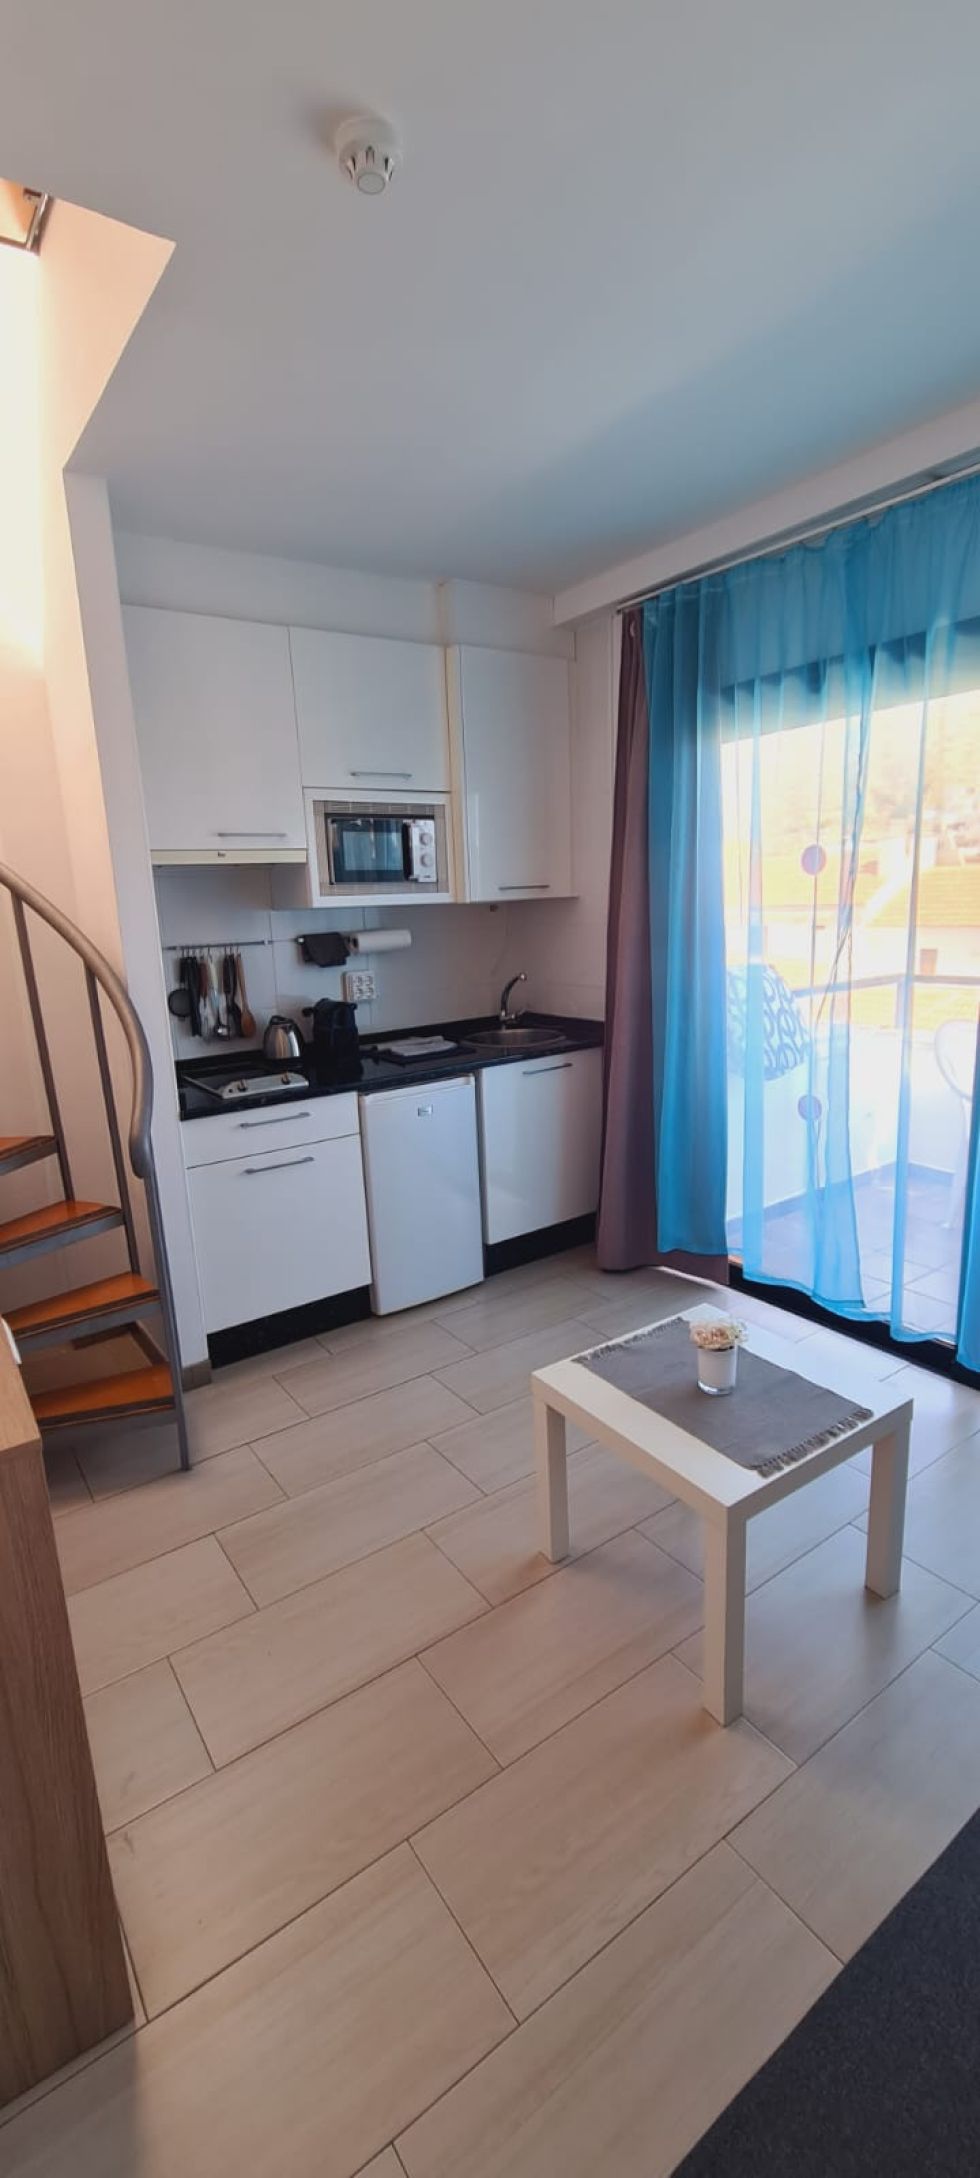 Apartment for rent in  Udalla Park, Arona, Tenerife